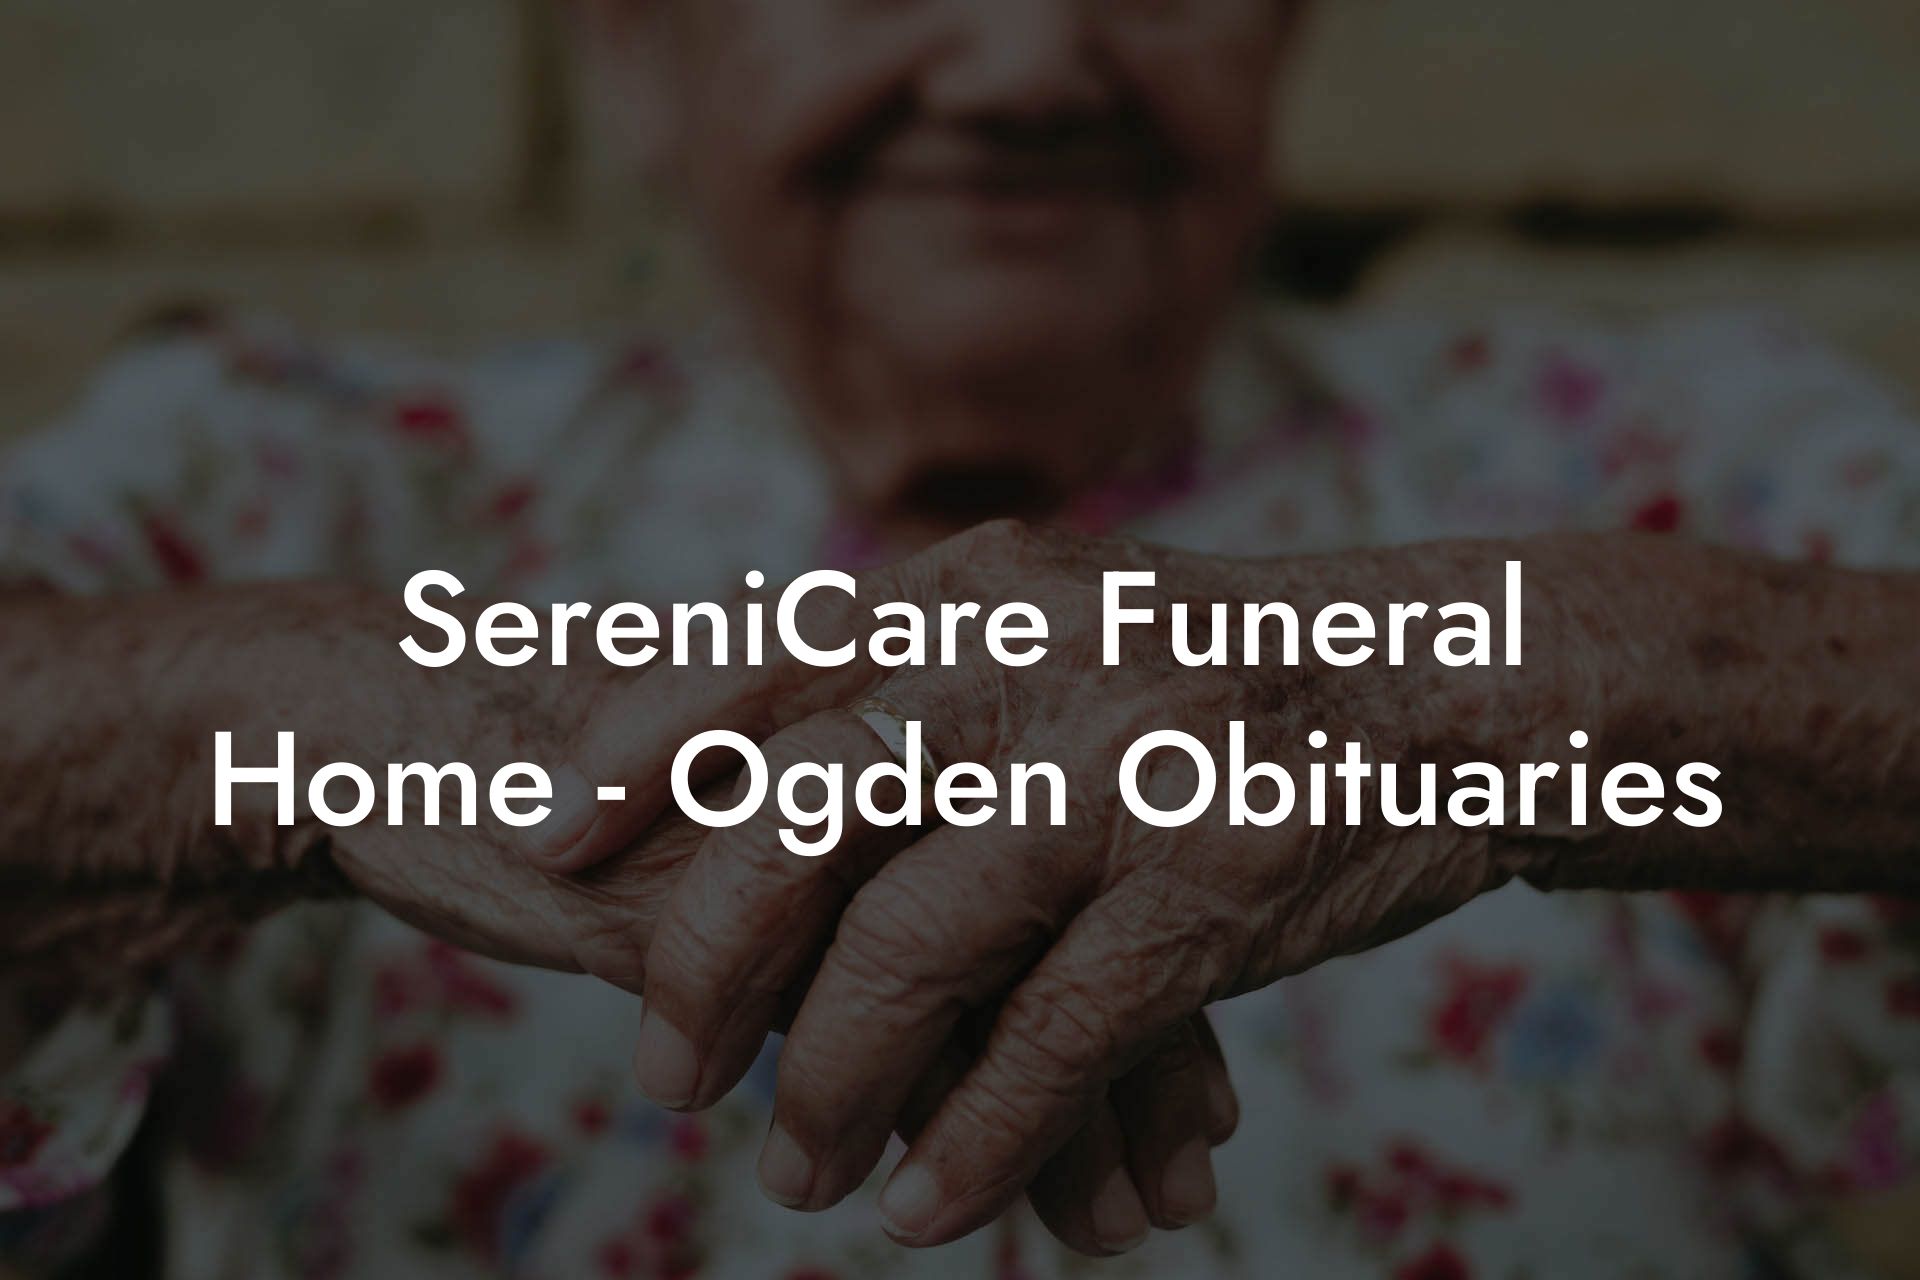 SereniCare Funeral Home - Ogden Obituaries